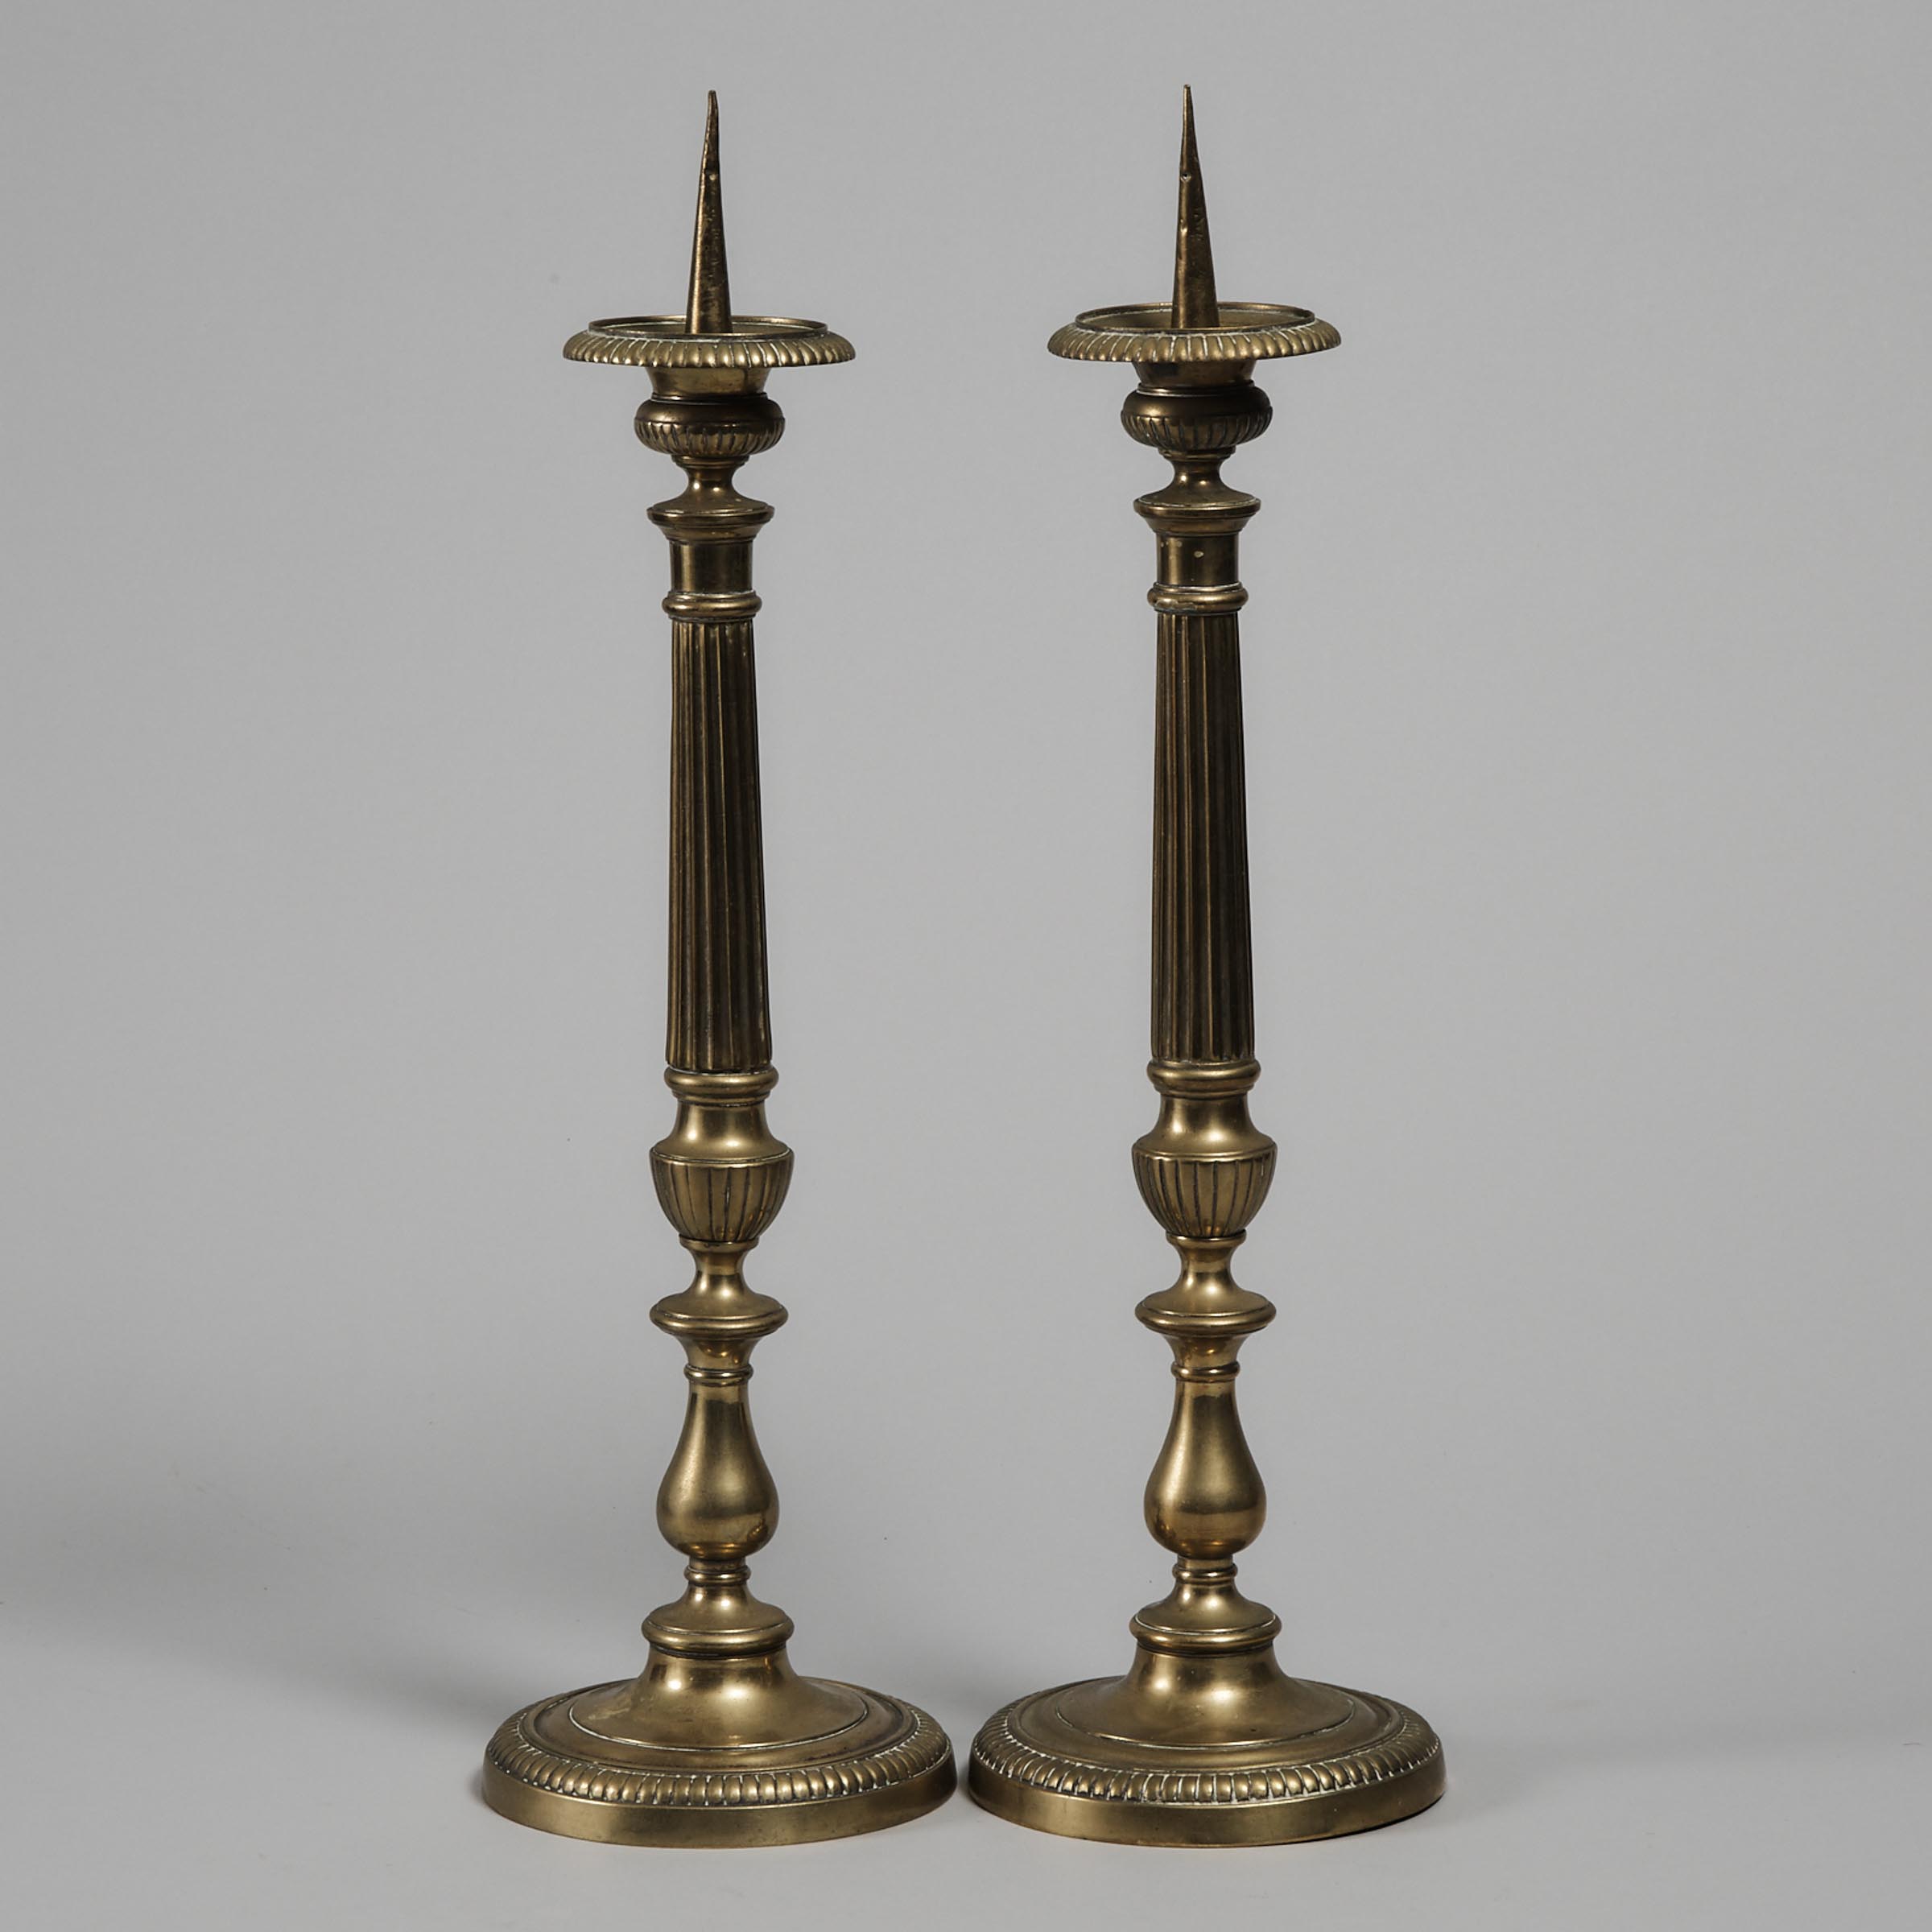 Pair of Brass Pricket Candlesticks, 19th century